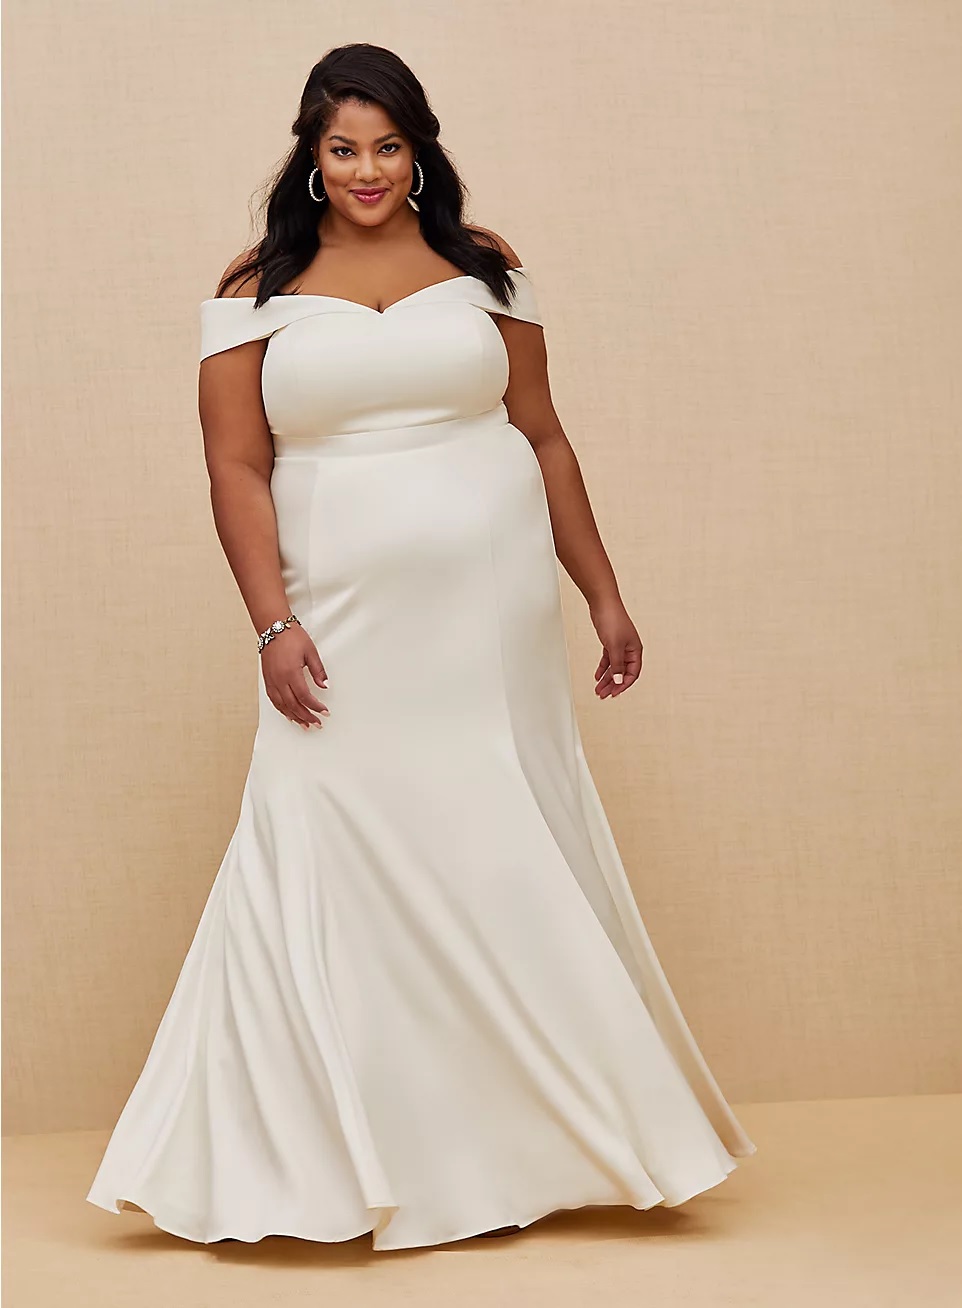 torrid wedding dress, plus size, off the shoulder, in white satin